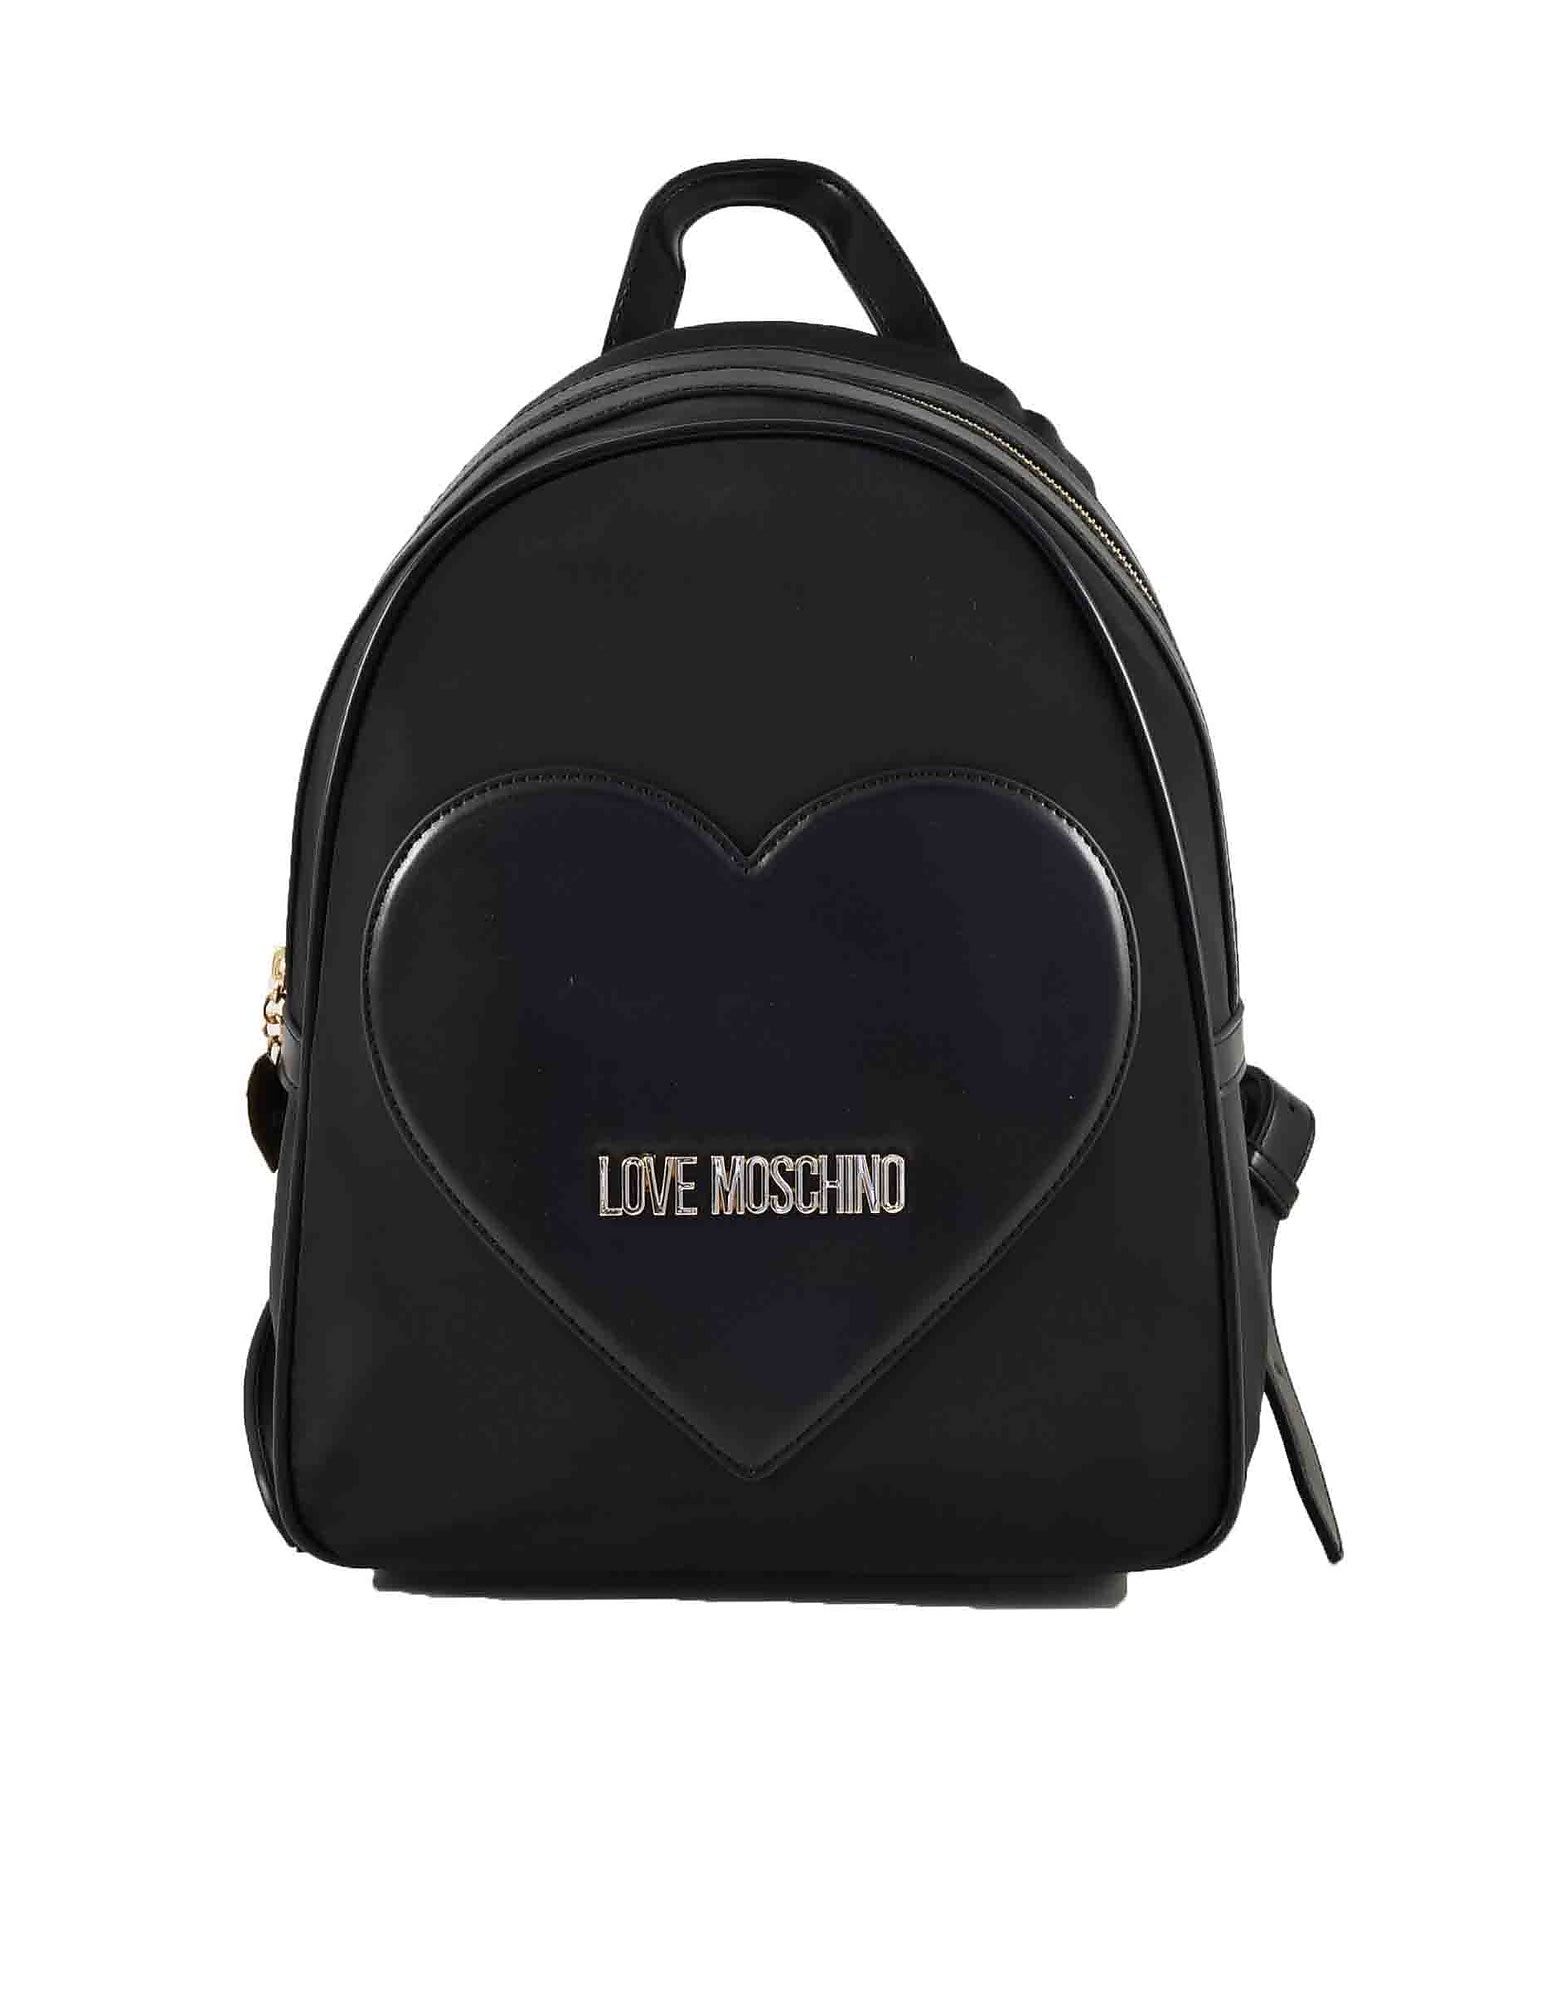 Love Moschino Womens Black Backpack